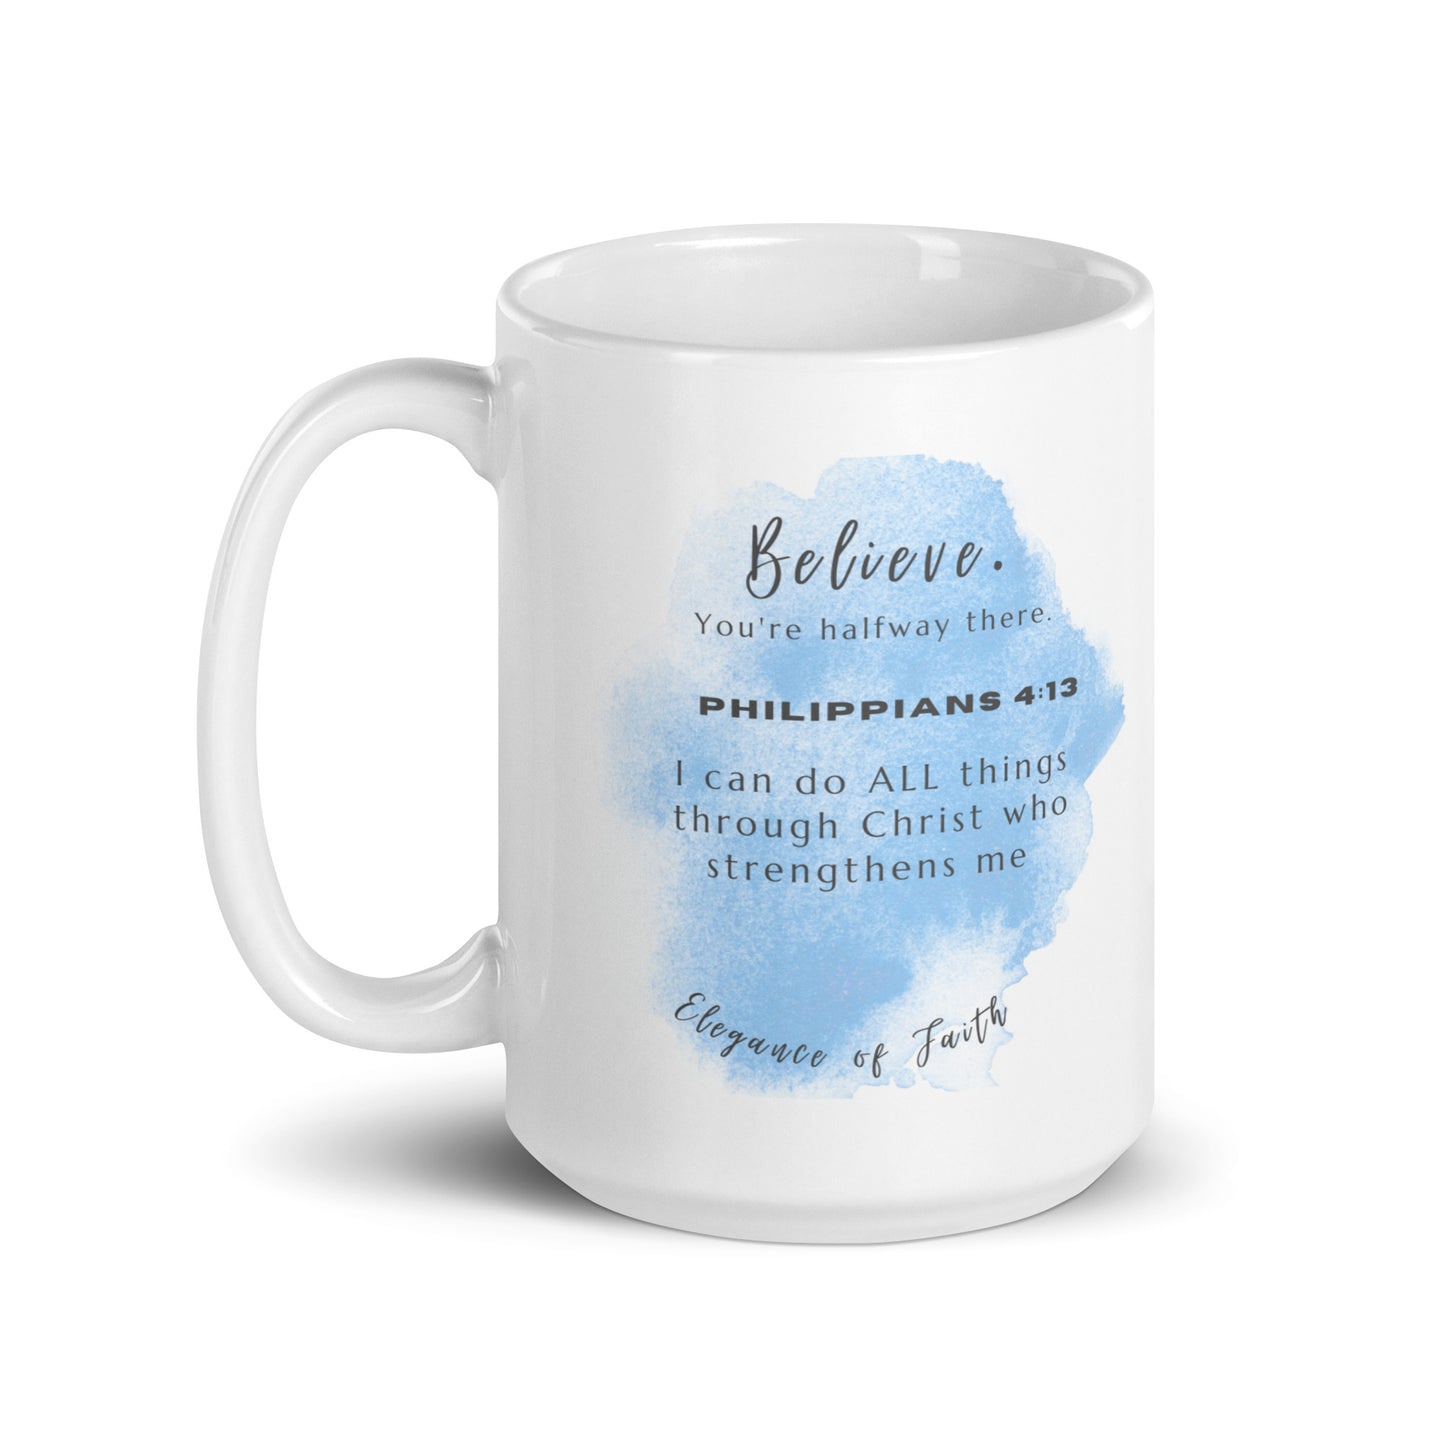 Believe - Philippians  4:13 White glossy mug